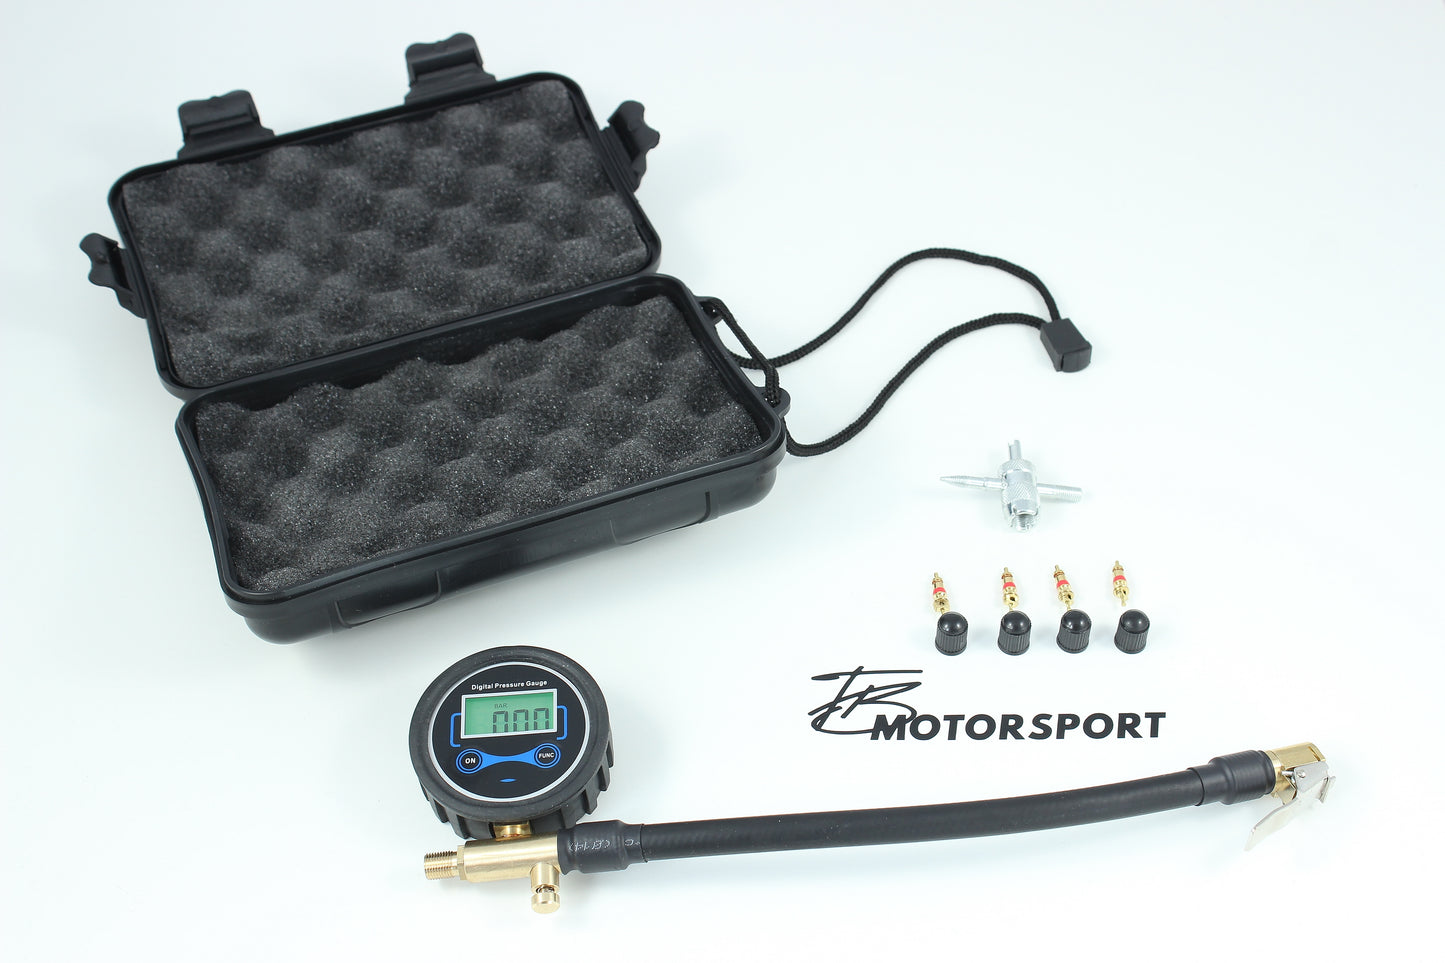 Luftdruckprüfer Motorsport Digital TBM